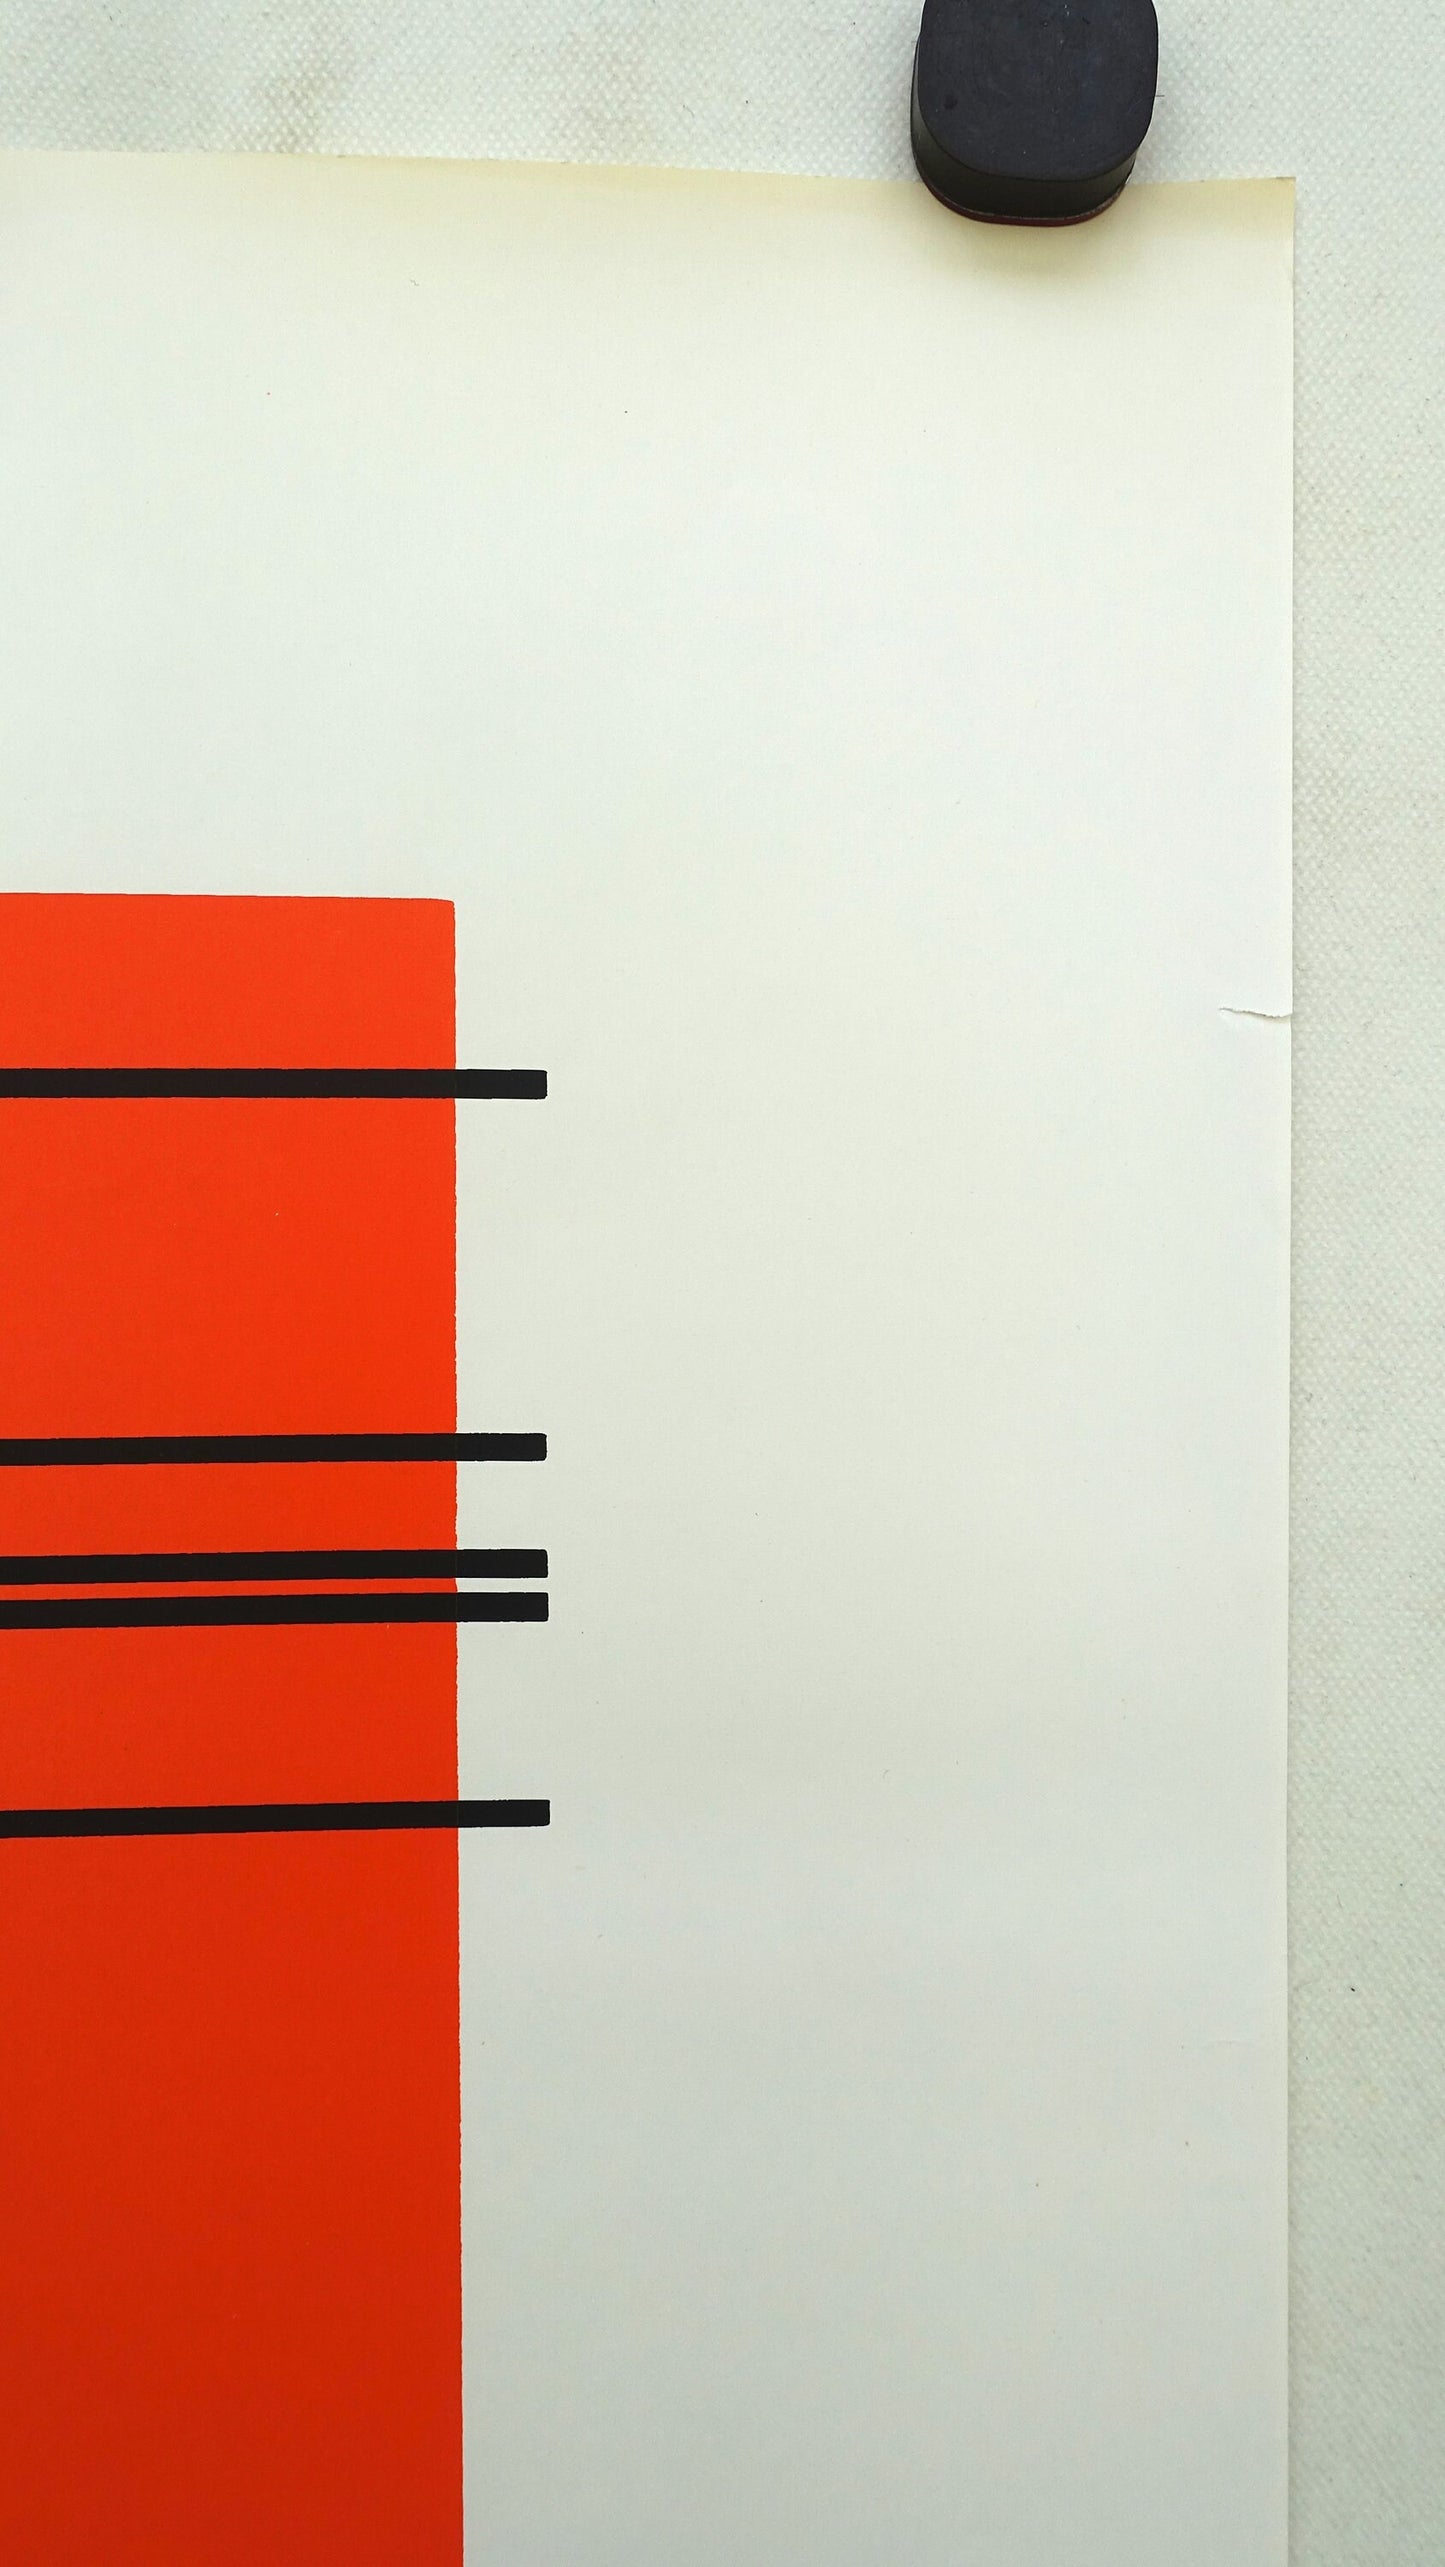 1970 Danish Modern Art (Orange) by Ole Schwalbe - Original Vintage Poster